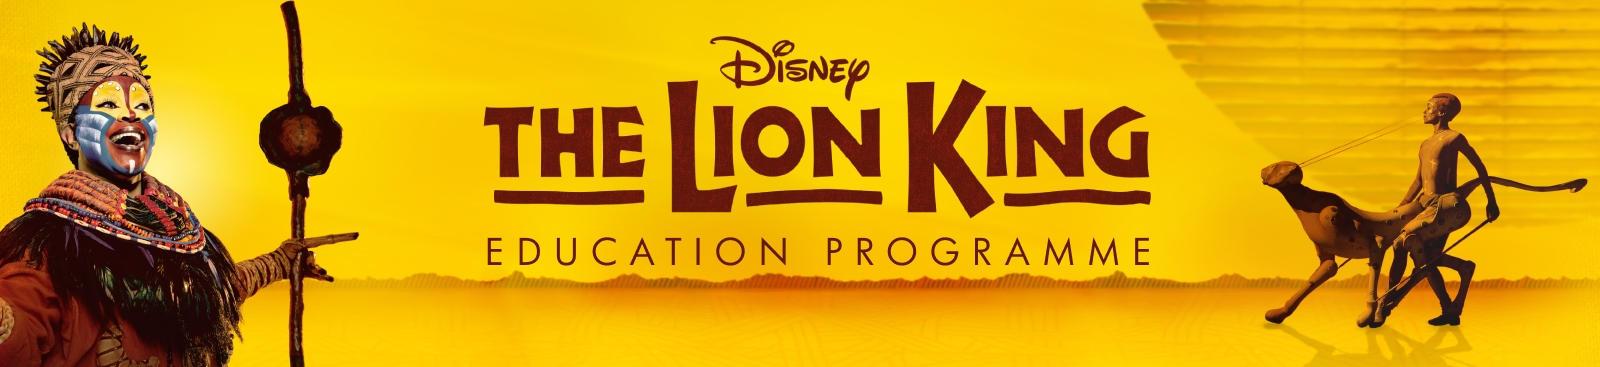 The Lion King Education Programme